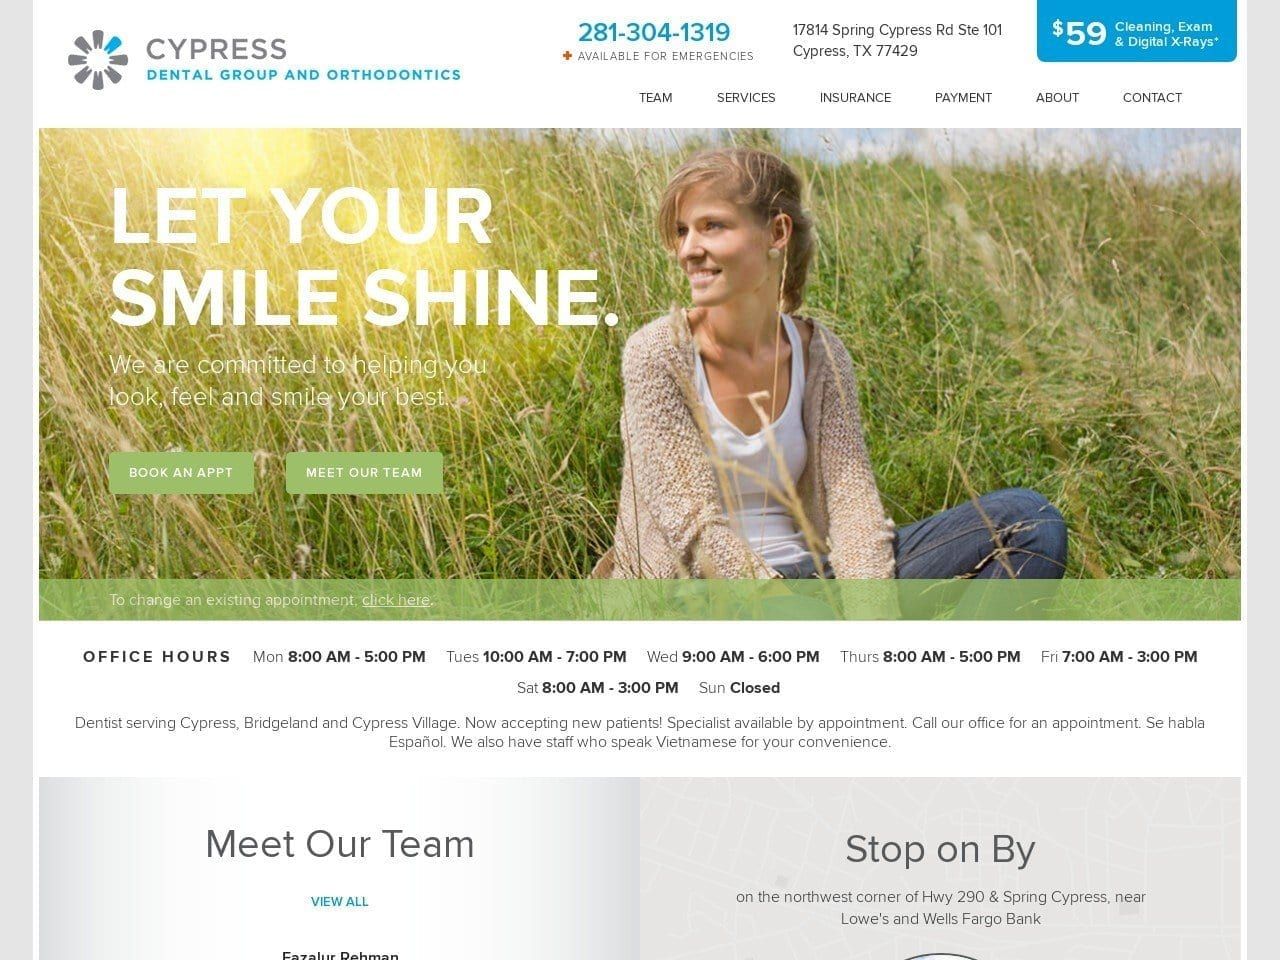 Cypress Dental Group and Orthodontics Website Screenshot from cypressdentistoffice.com